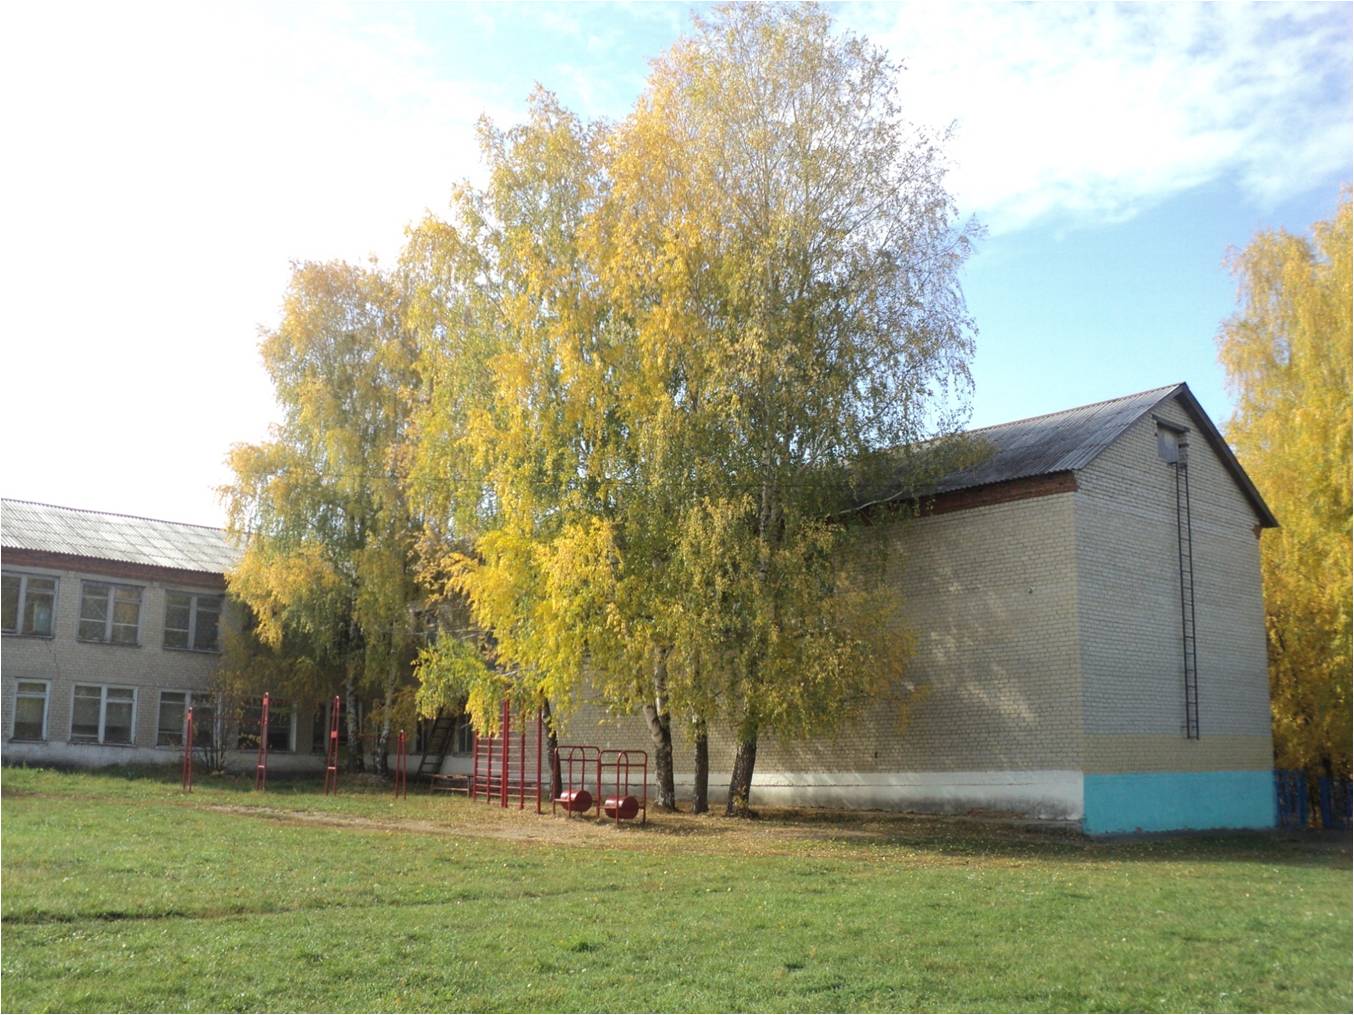 Здание школы.